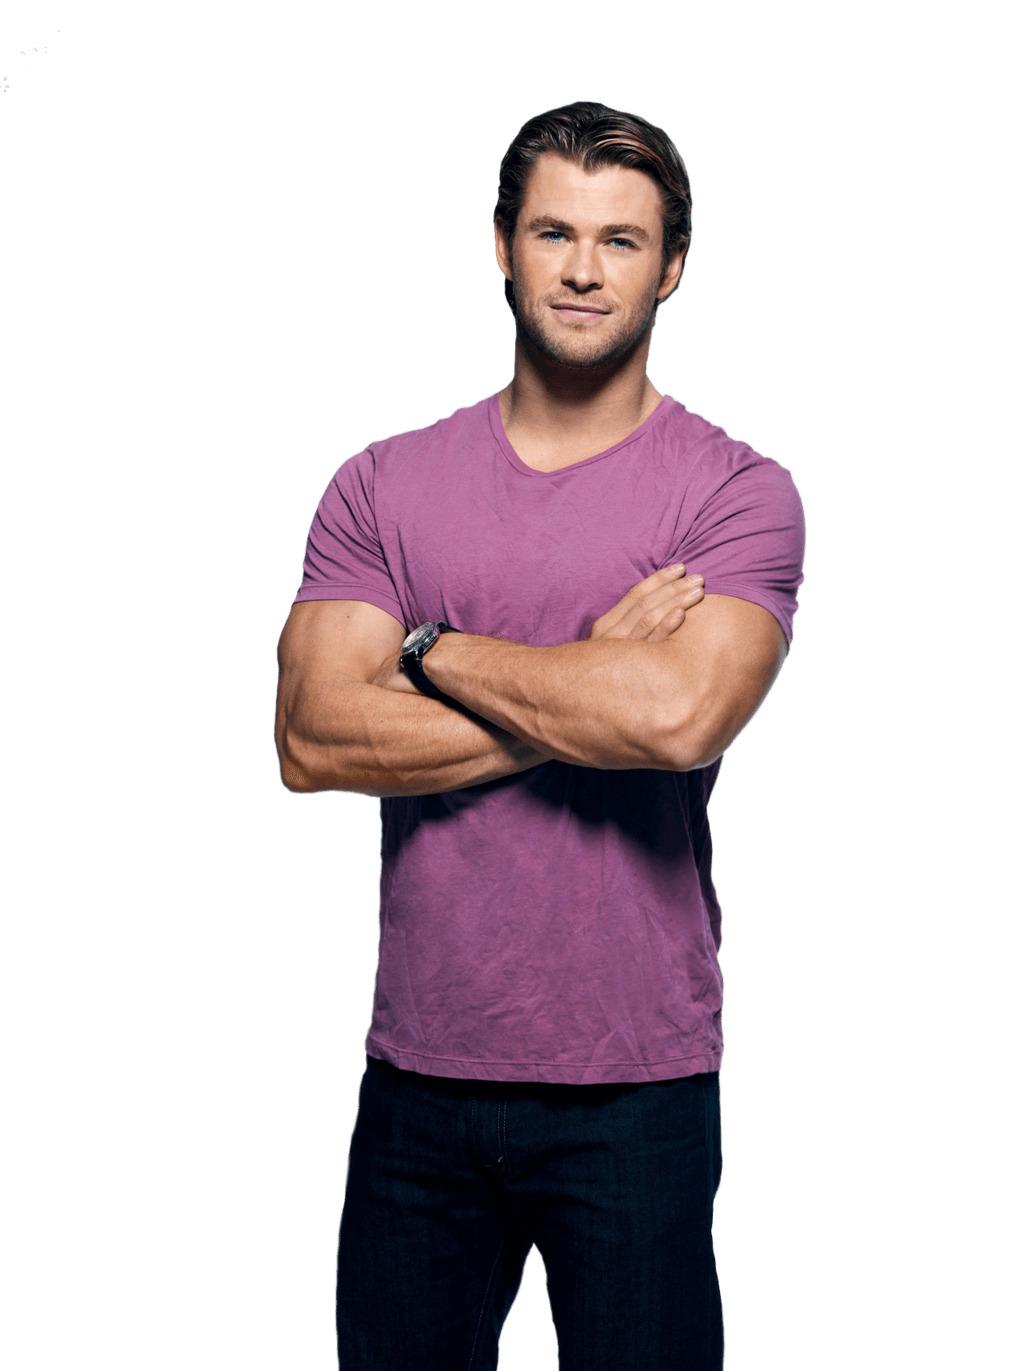 Chris Hemsworth Purple Tshirt png transparent